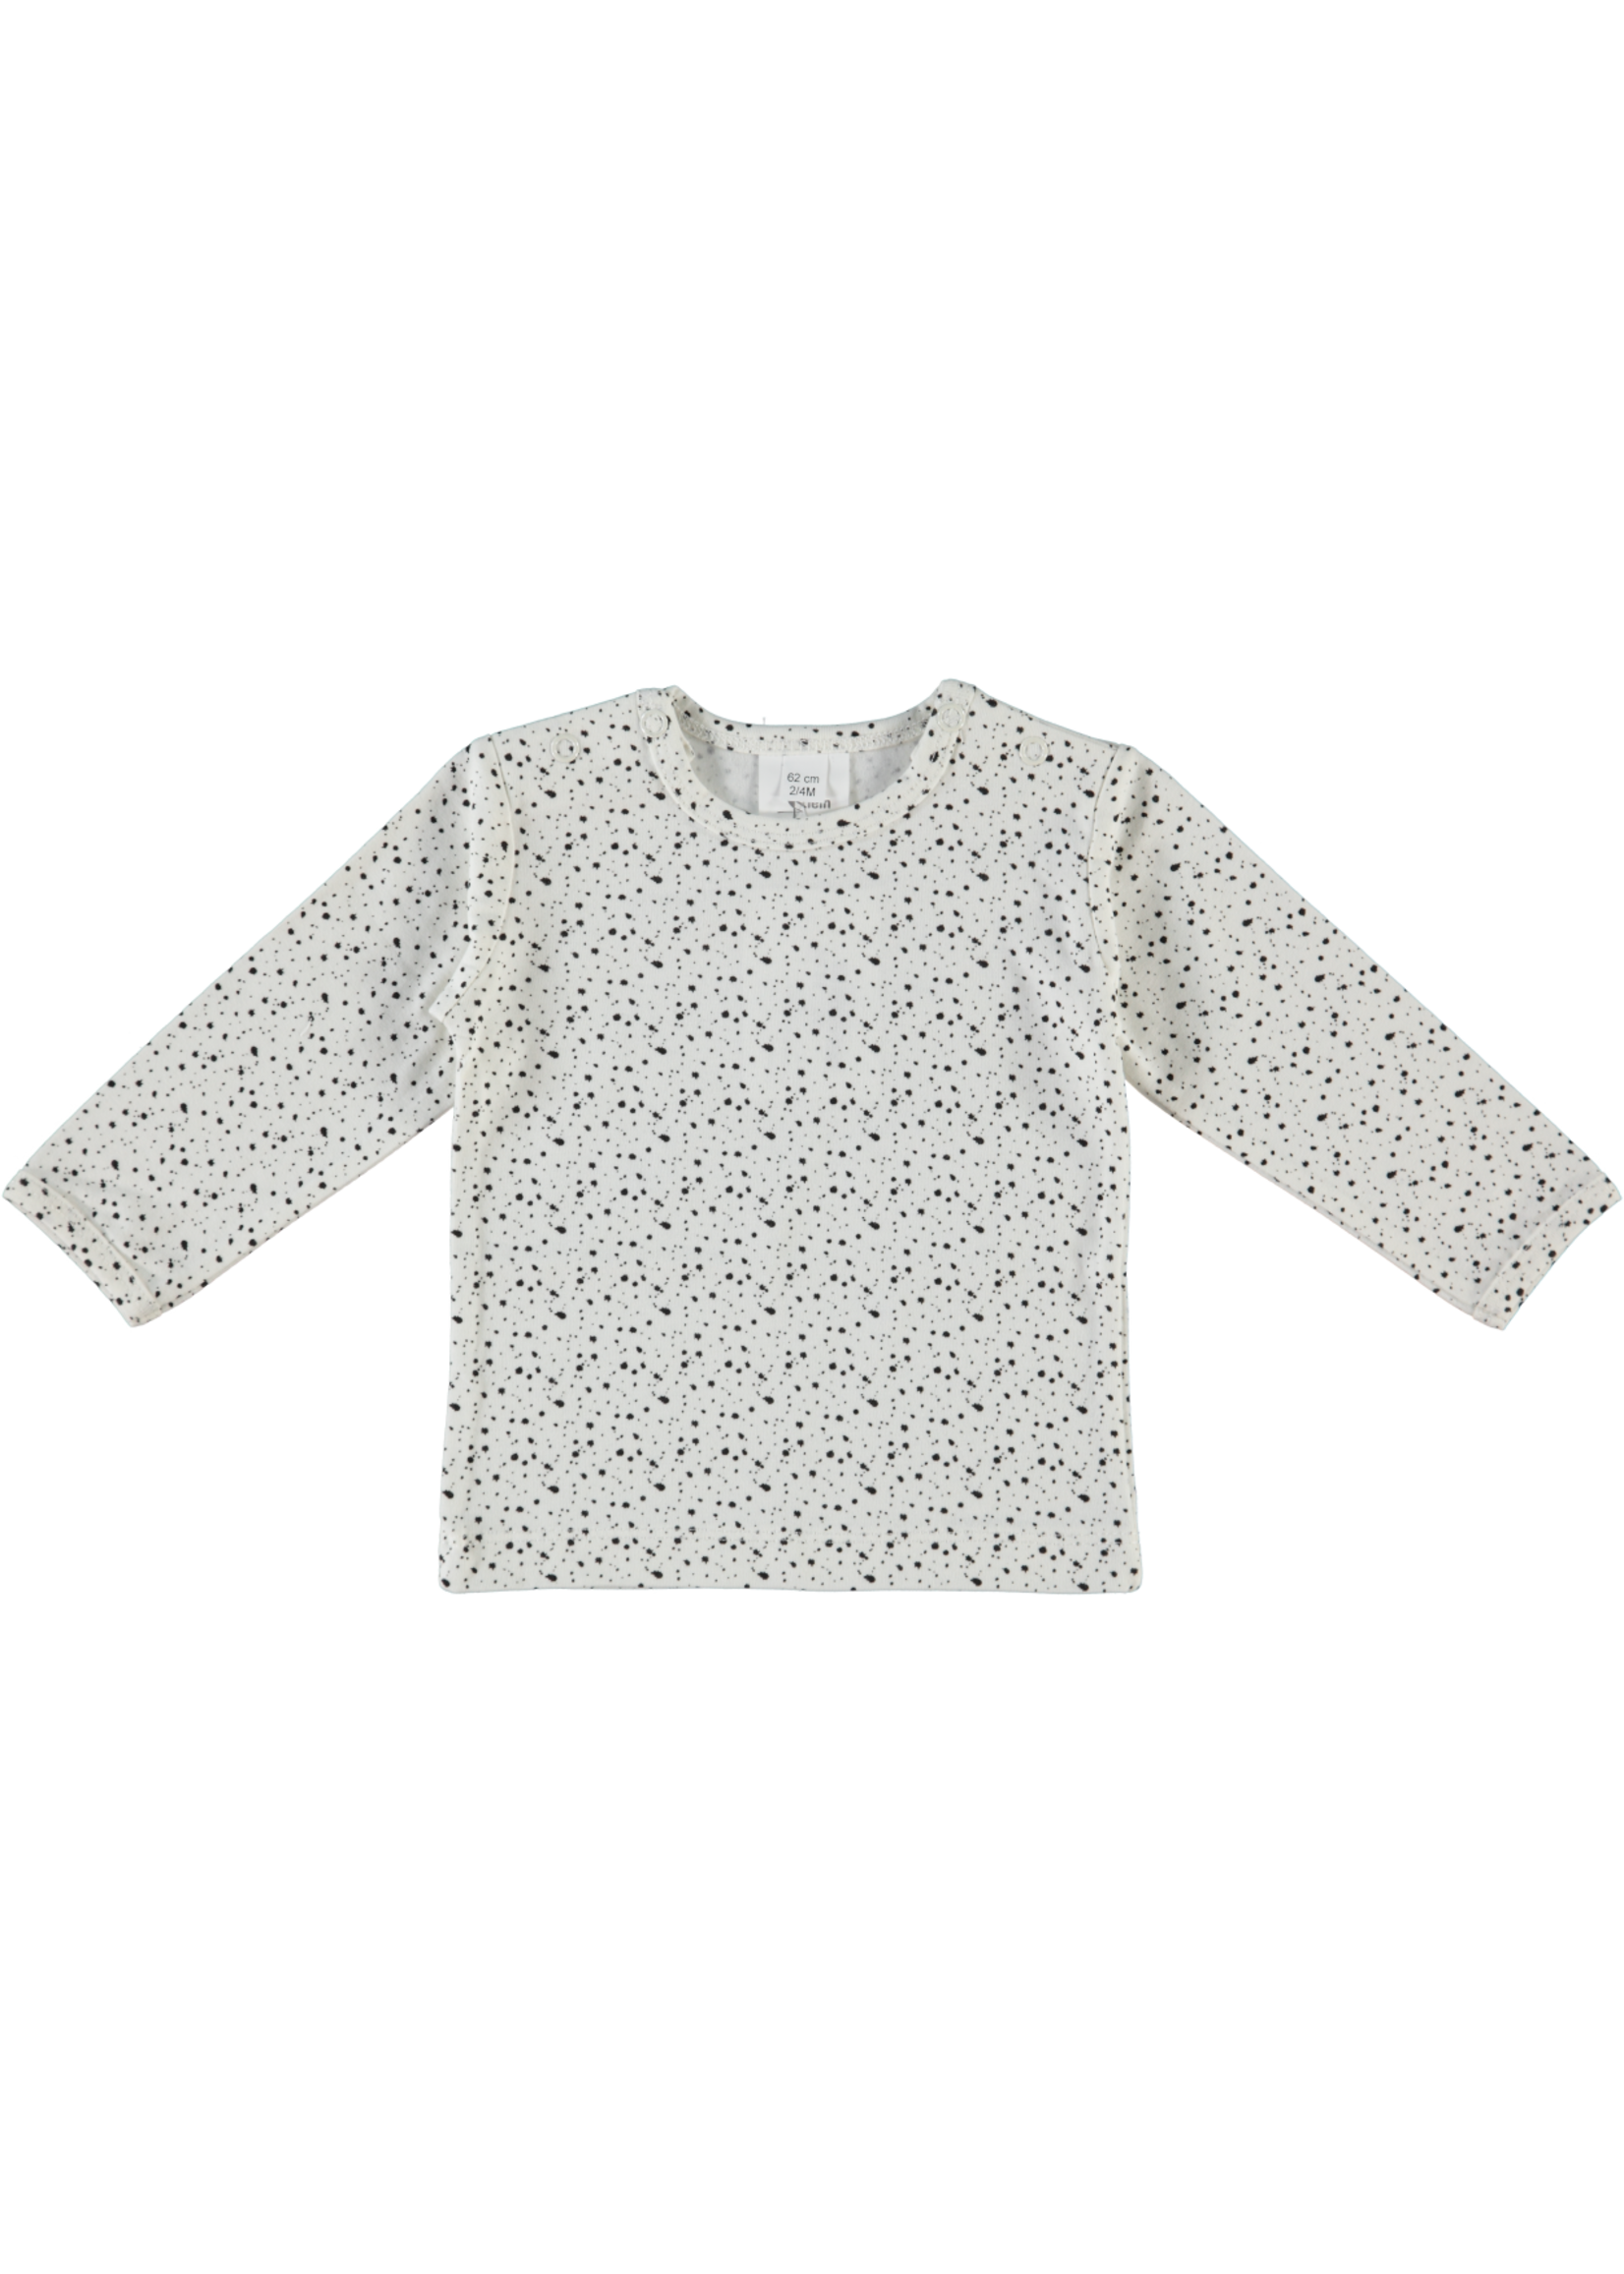 Klein Baby Shirtje wit print